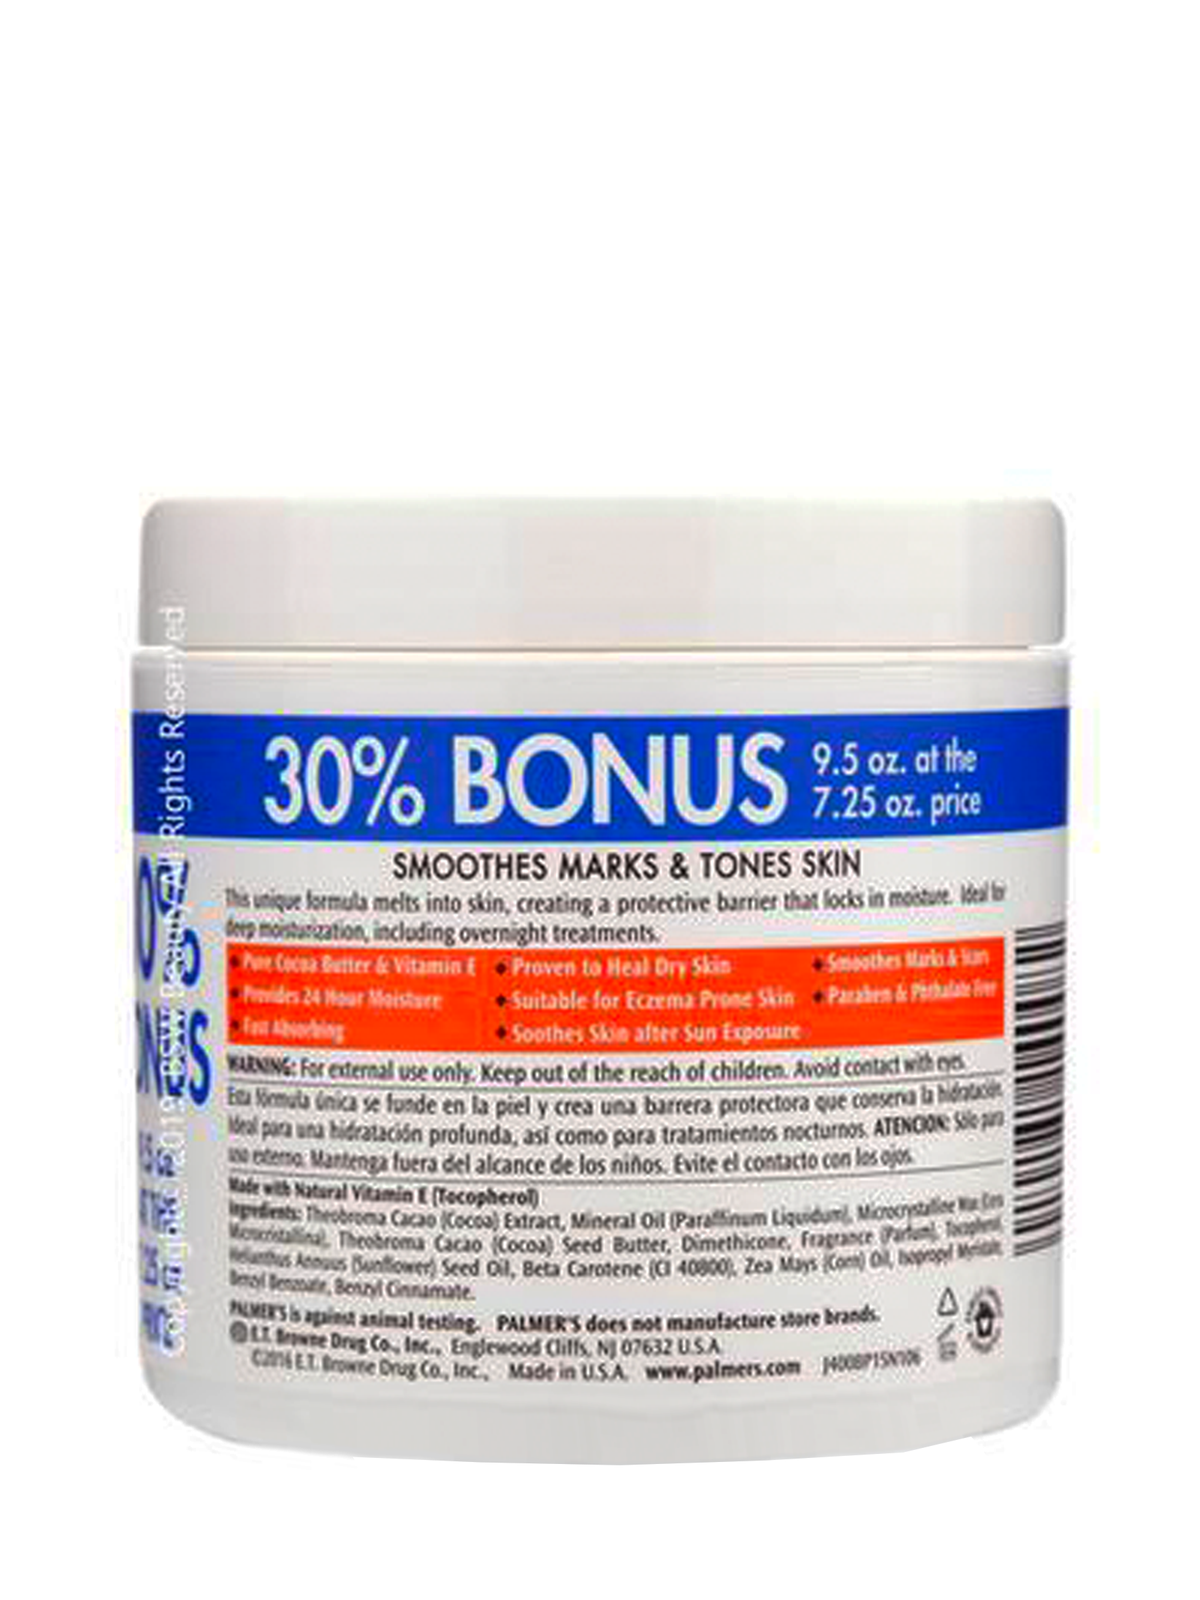 Palmer's Cocoa Butter Formula Heals Softens - 30% BONUS 9.5 oz [12 Pack]